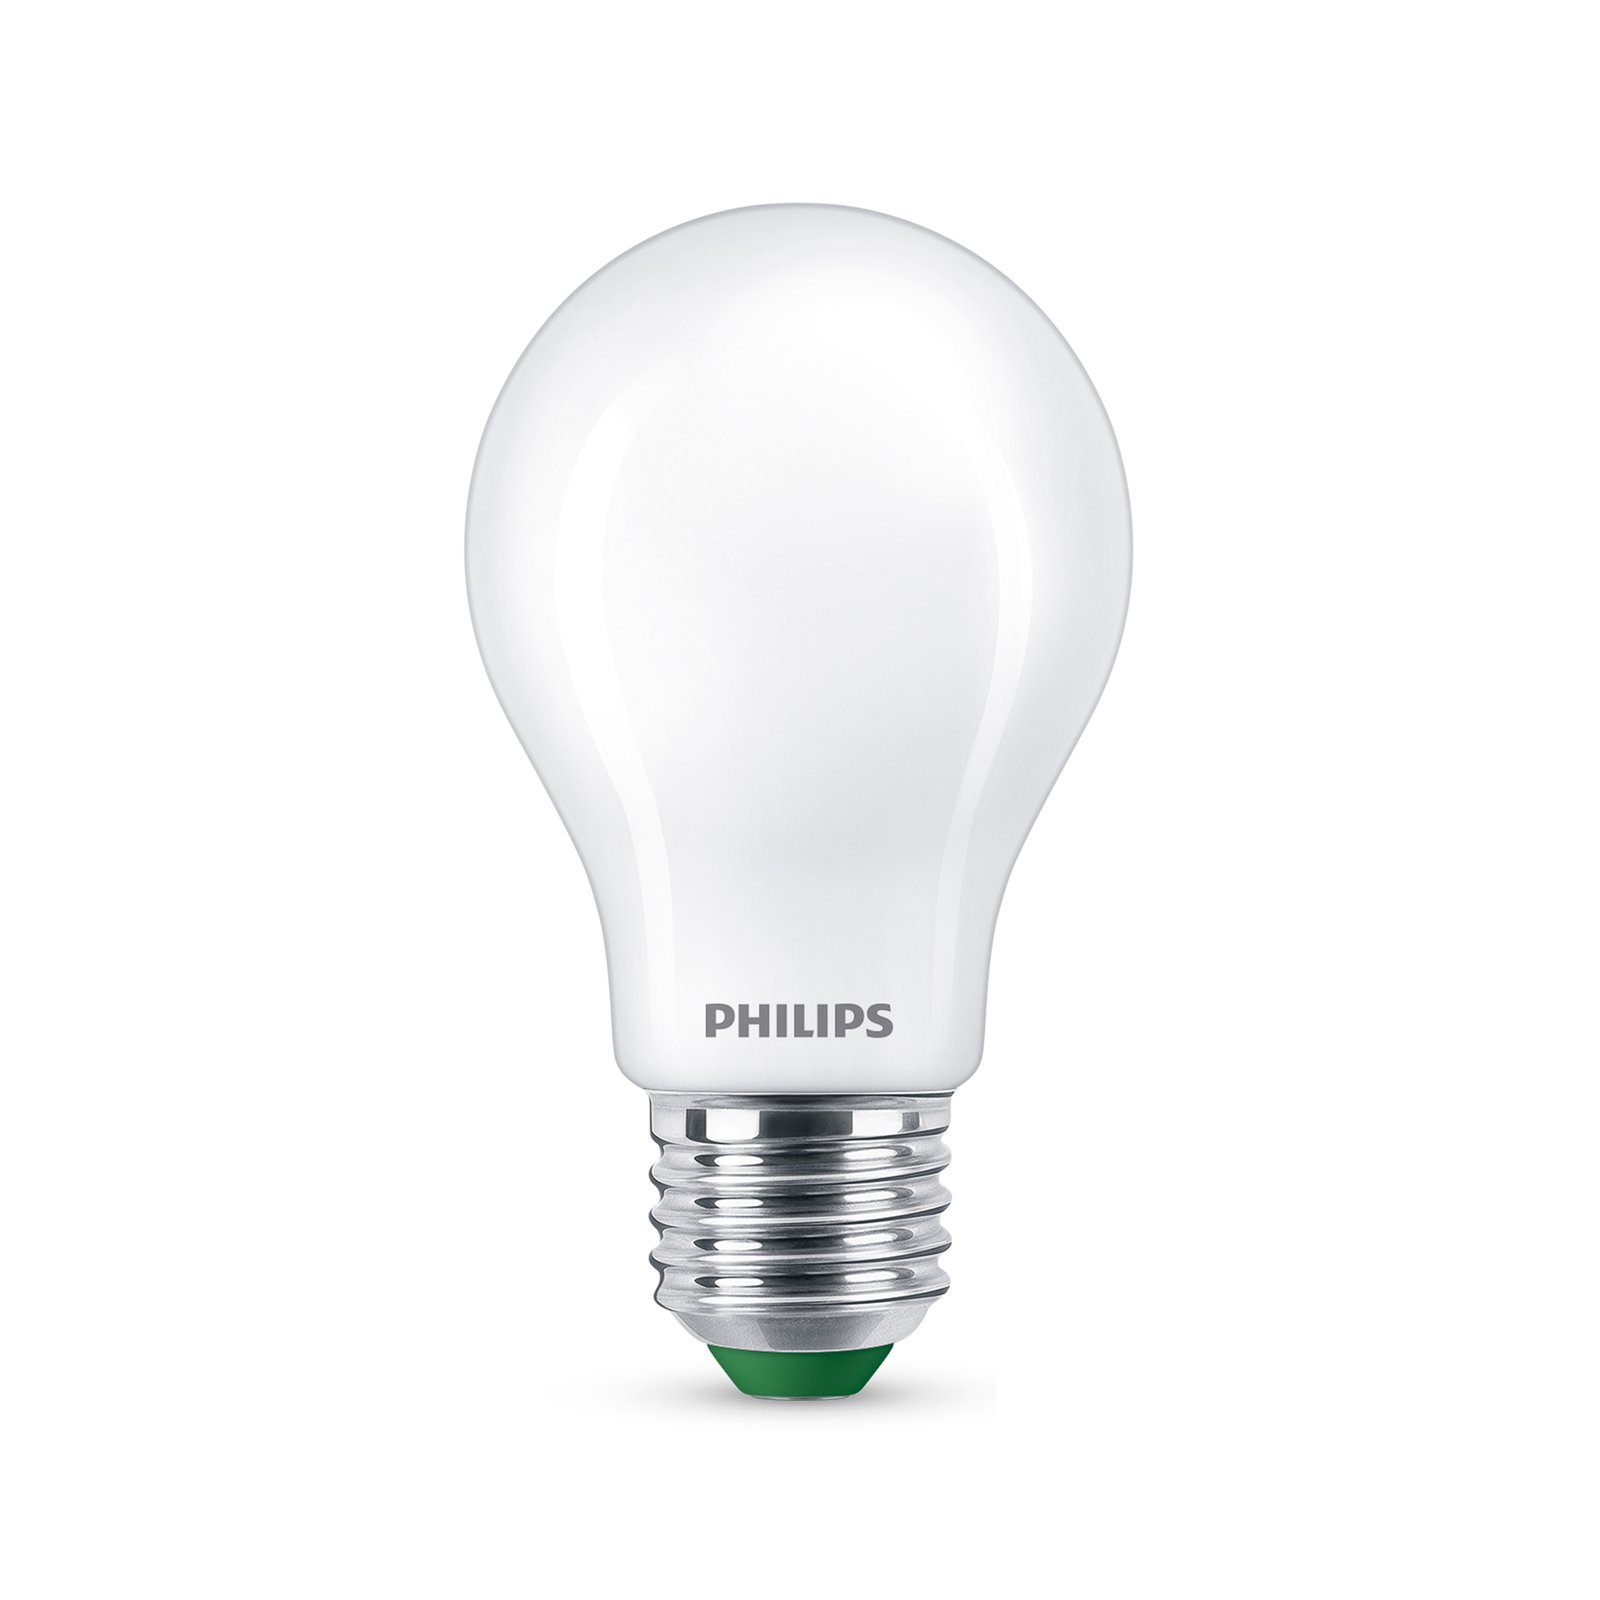 Philips bombilla LED E27 A60 4W 840lm mate 4.000K